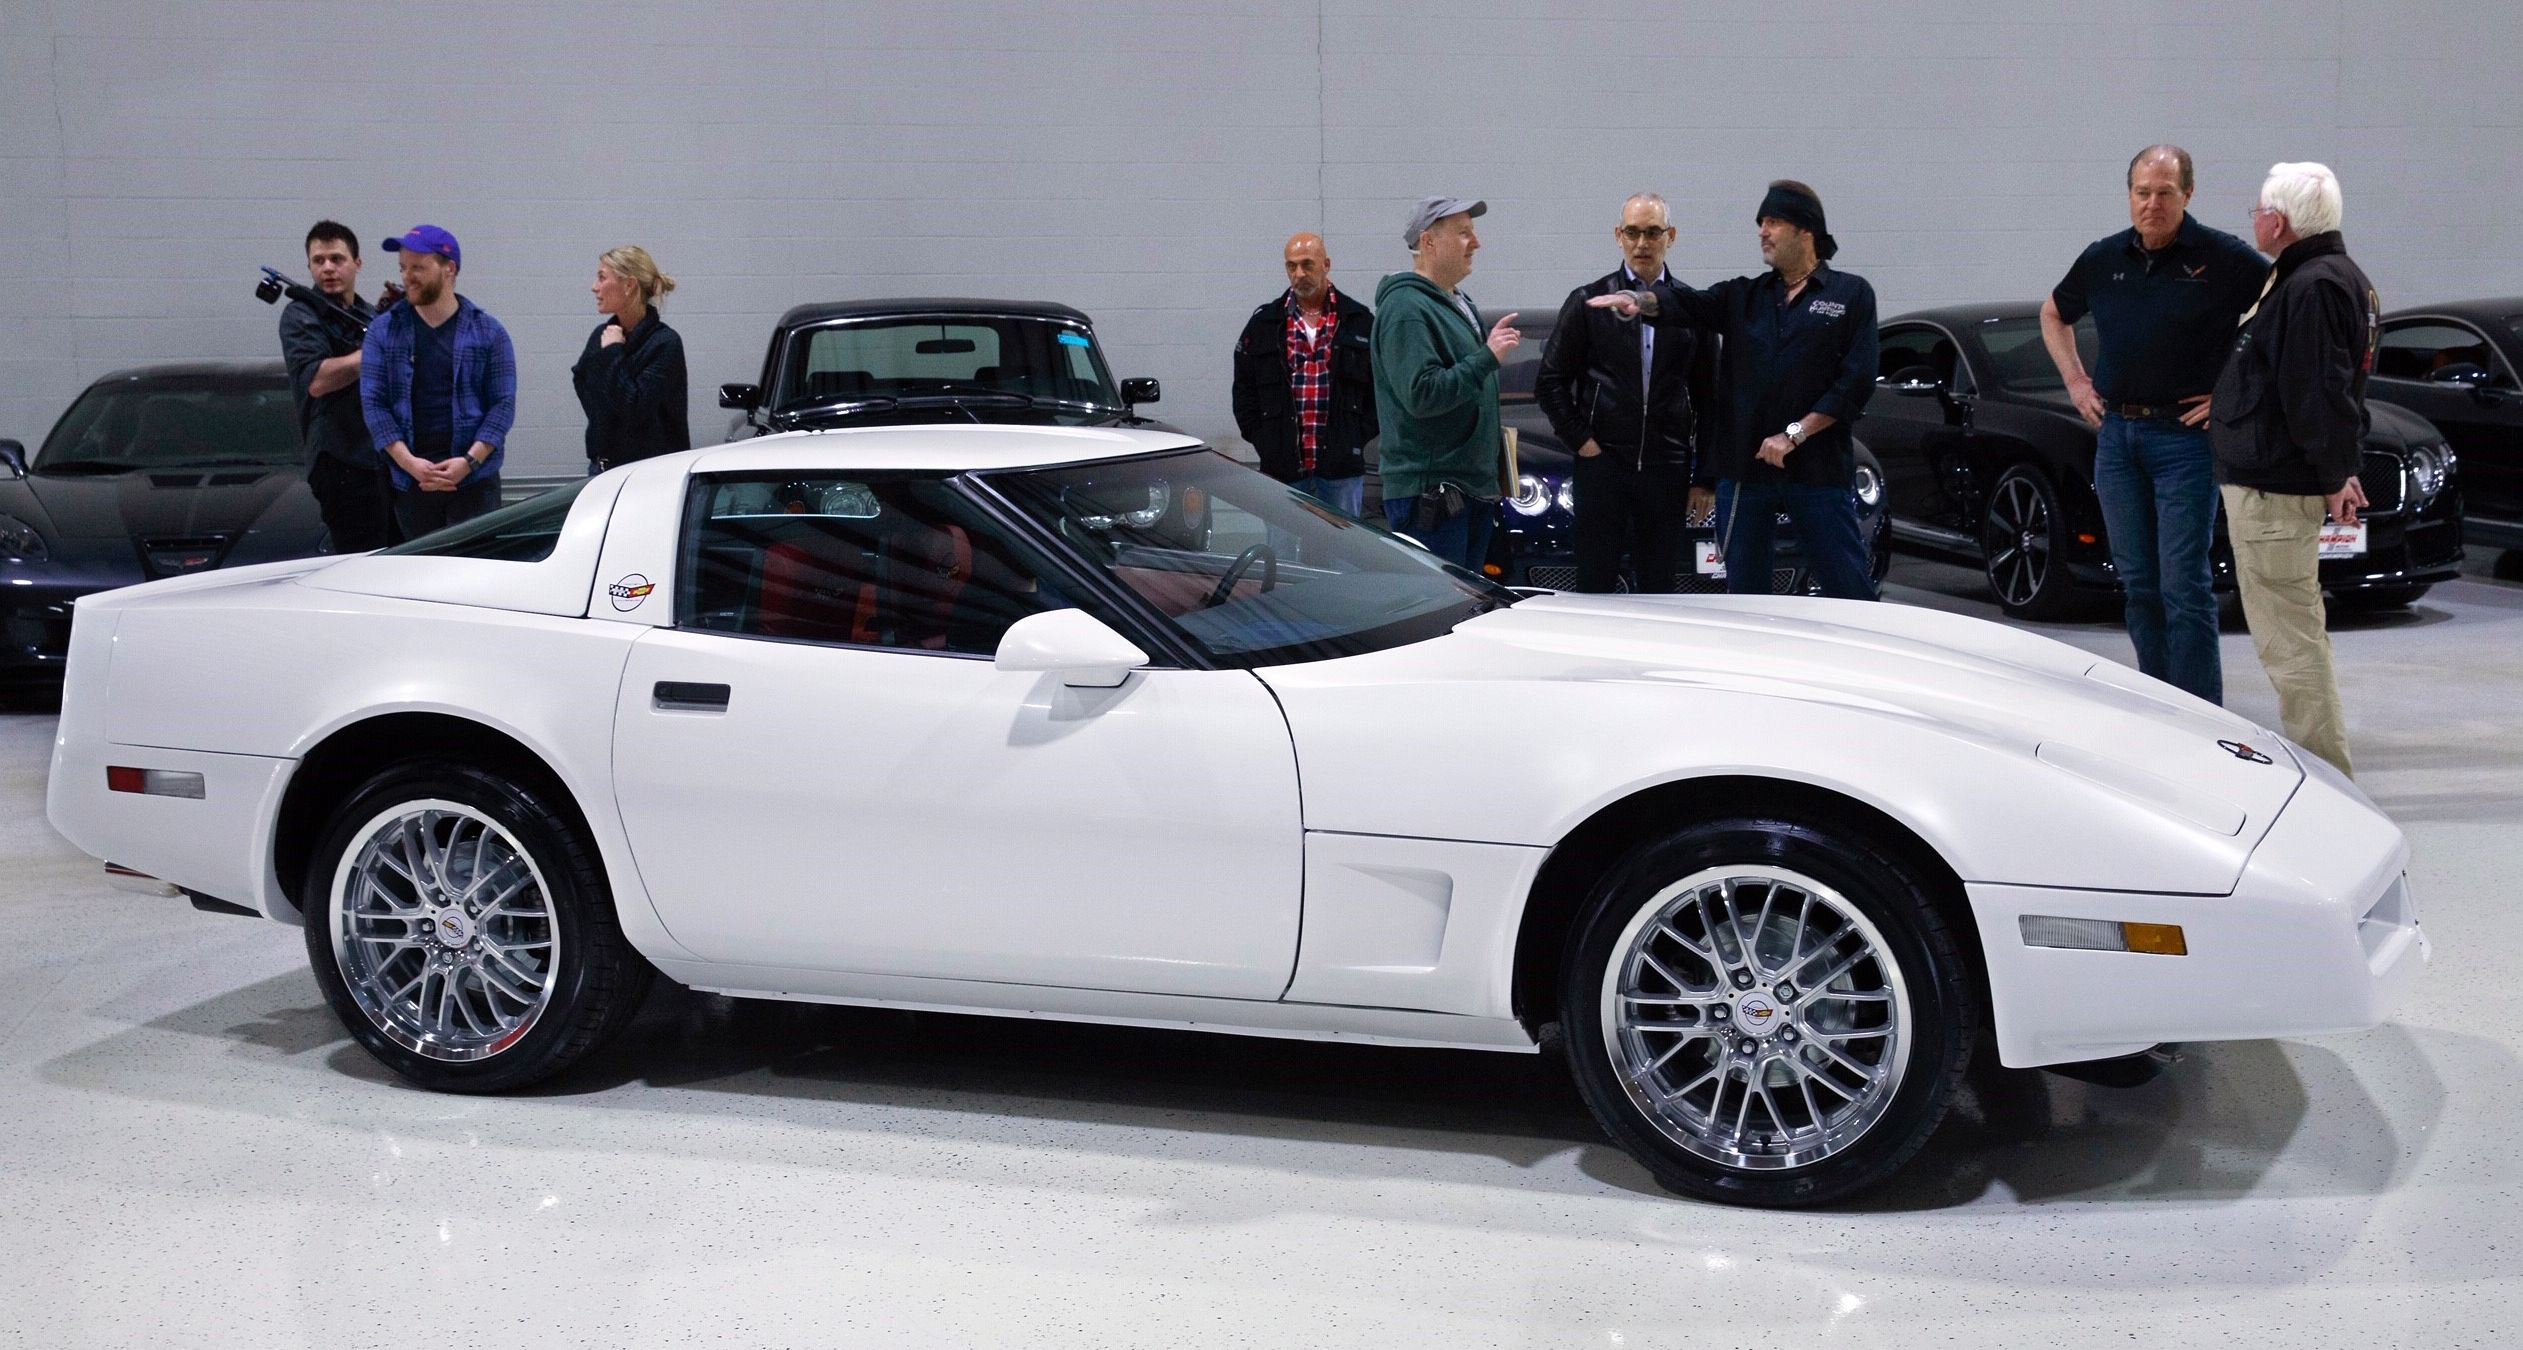 The last existing '83 Corvette